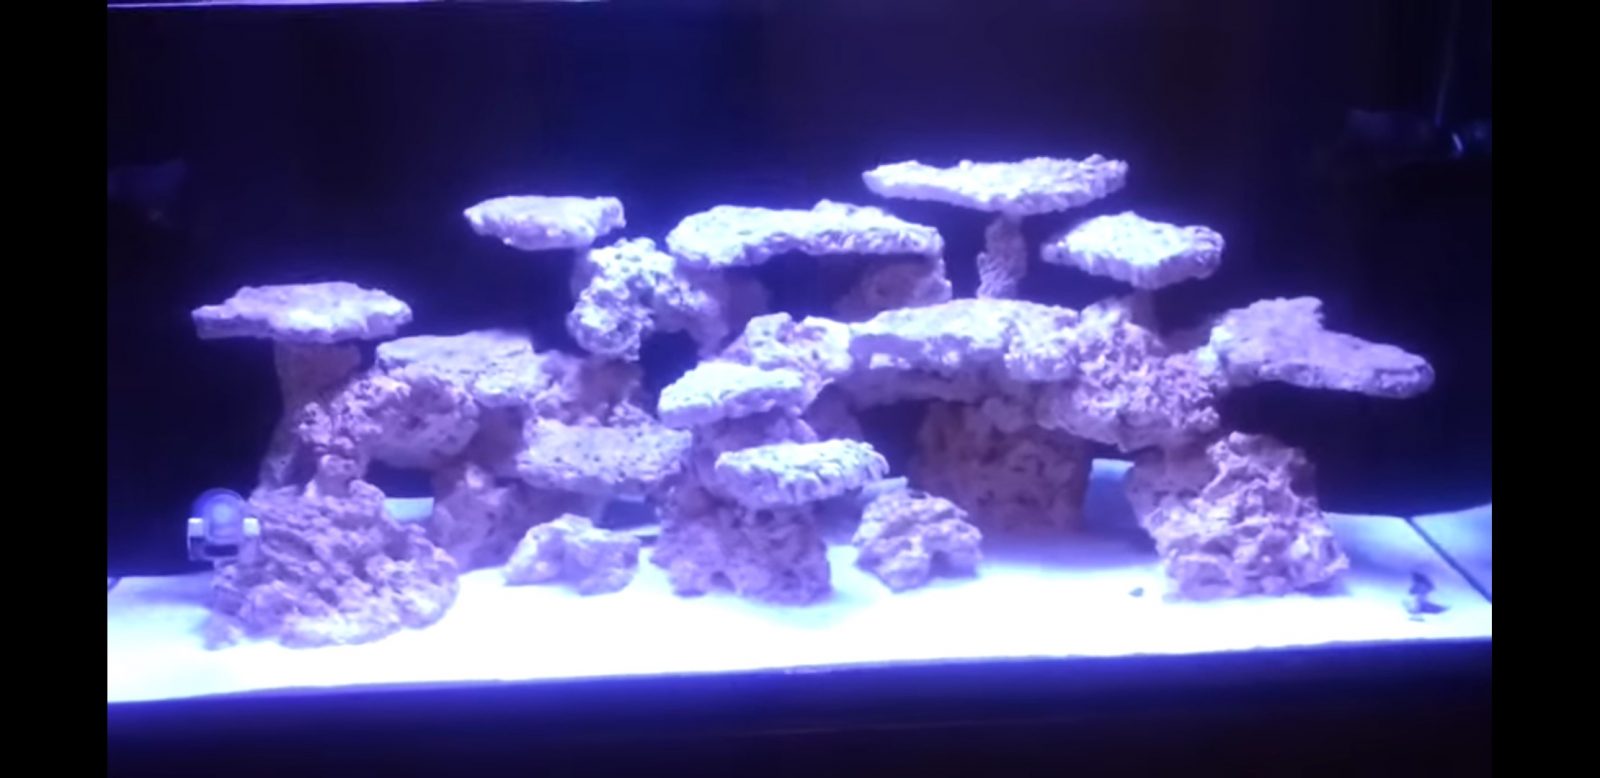 reef aquarium before orphek lighting